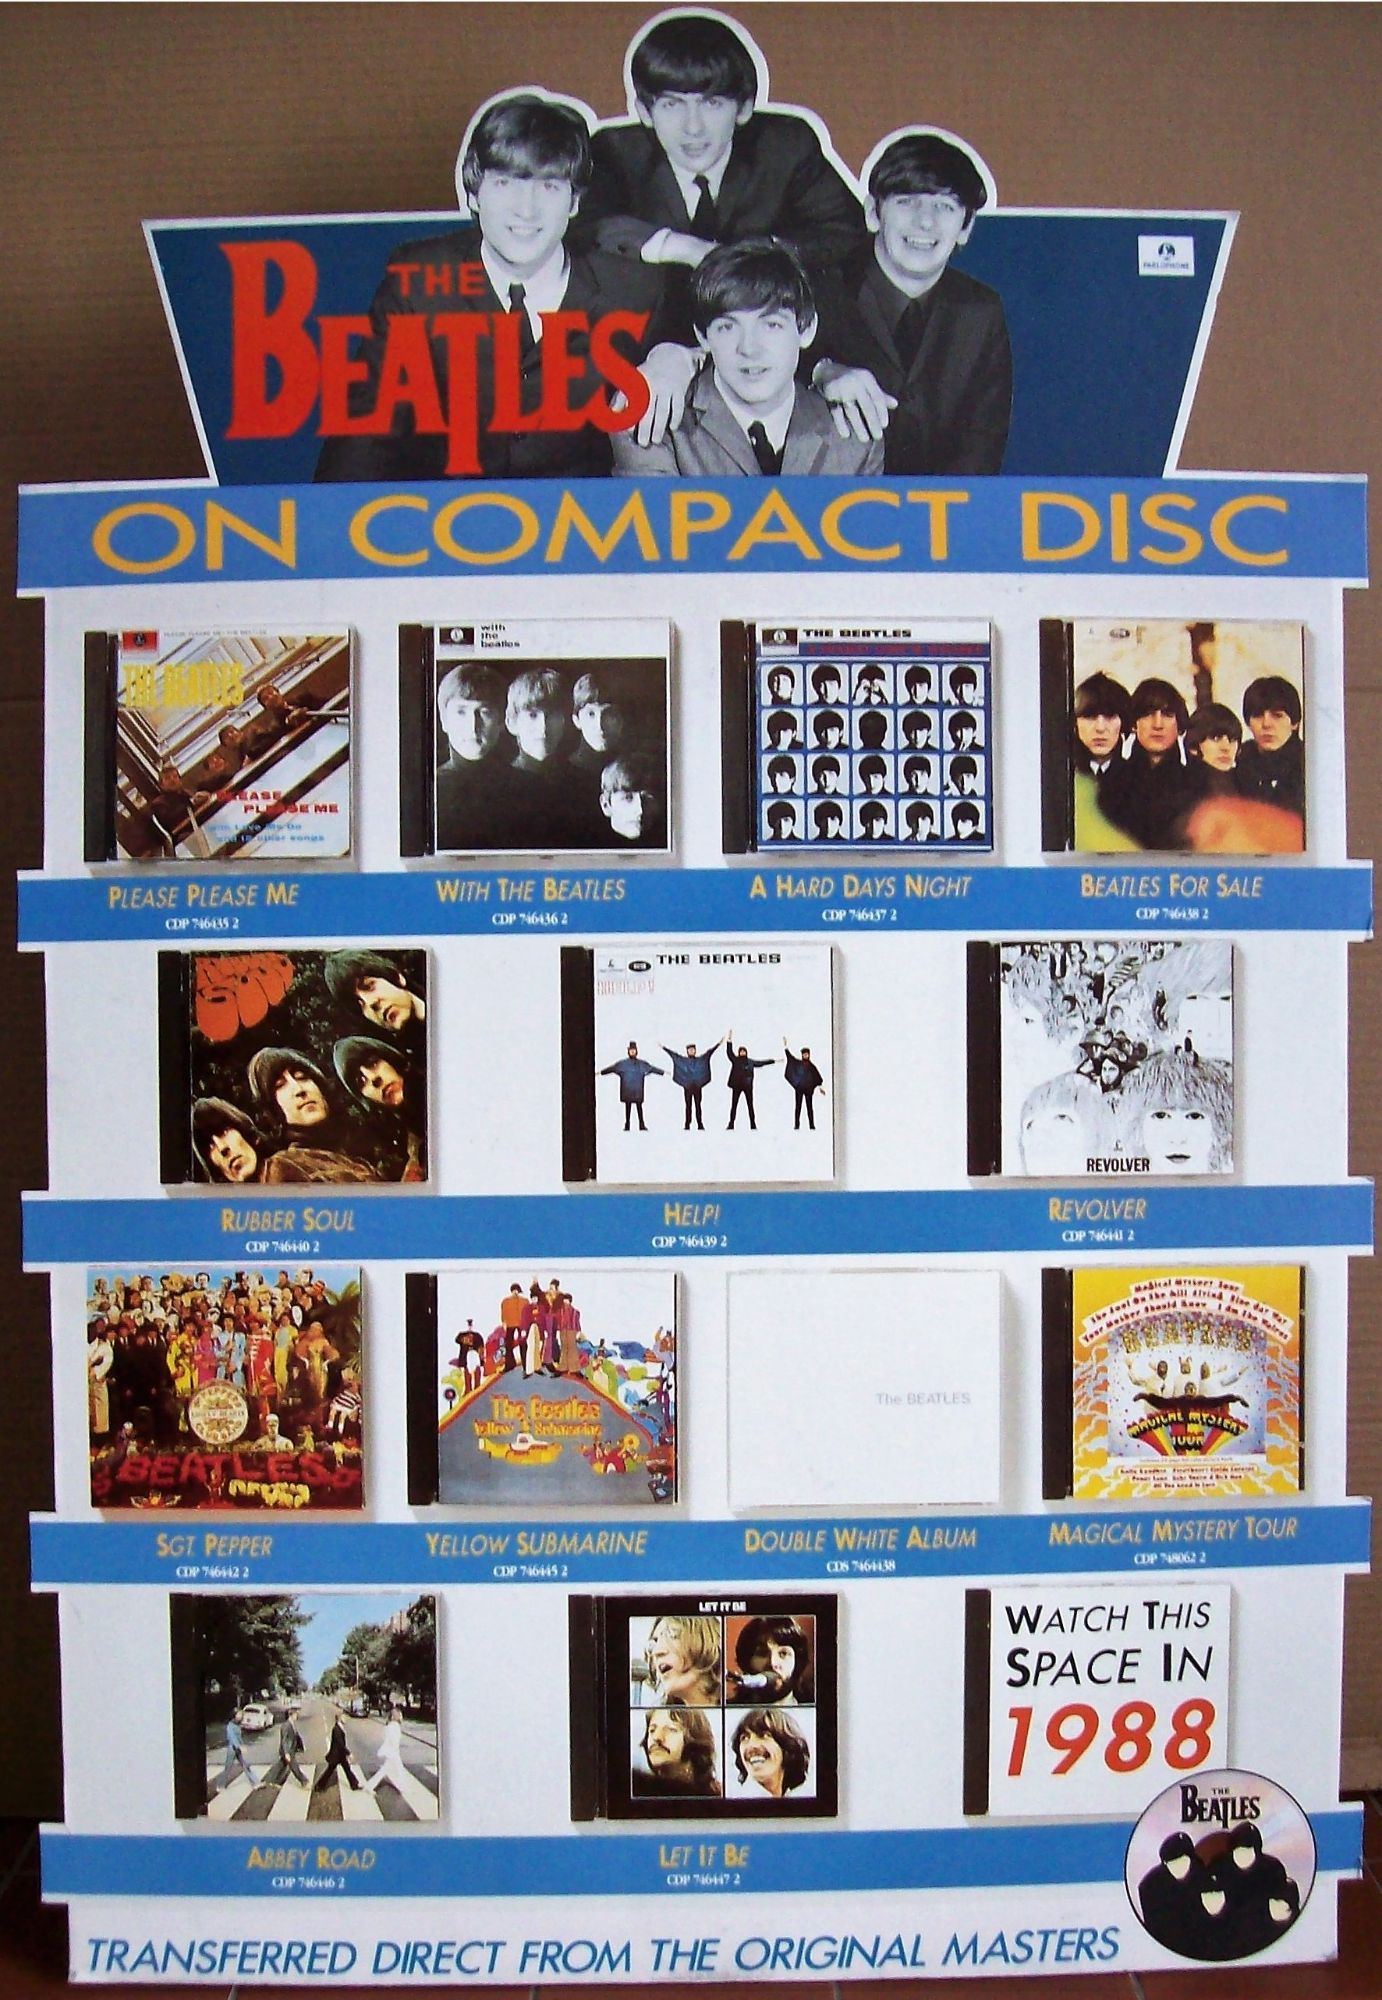 THE BEATLES U.K. RECORD COMPANY PROMO SHOP DISPLAY STANDEE CD ALBUM RELEASE